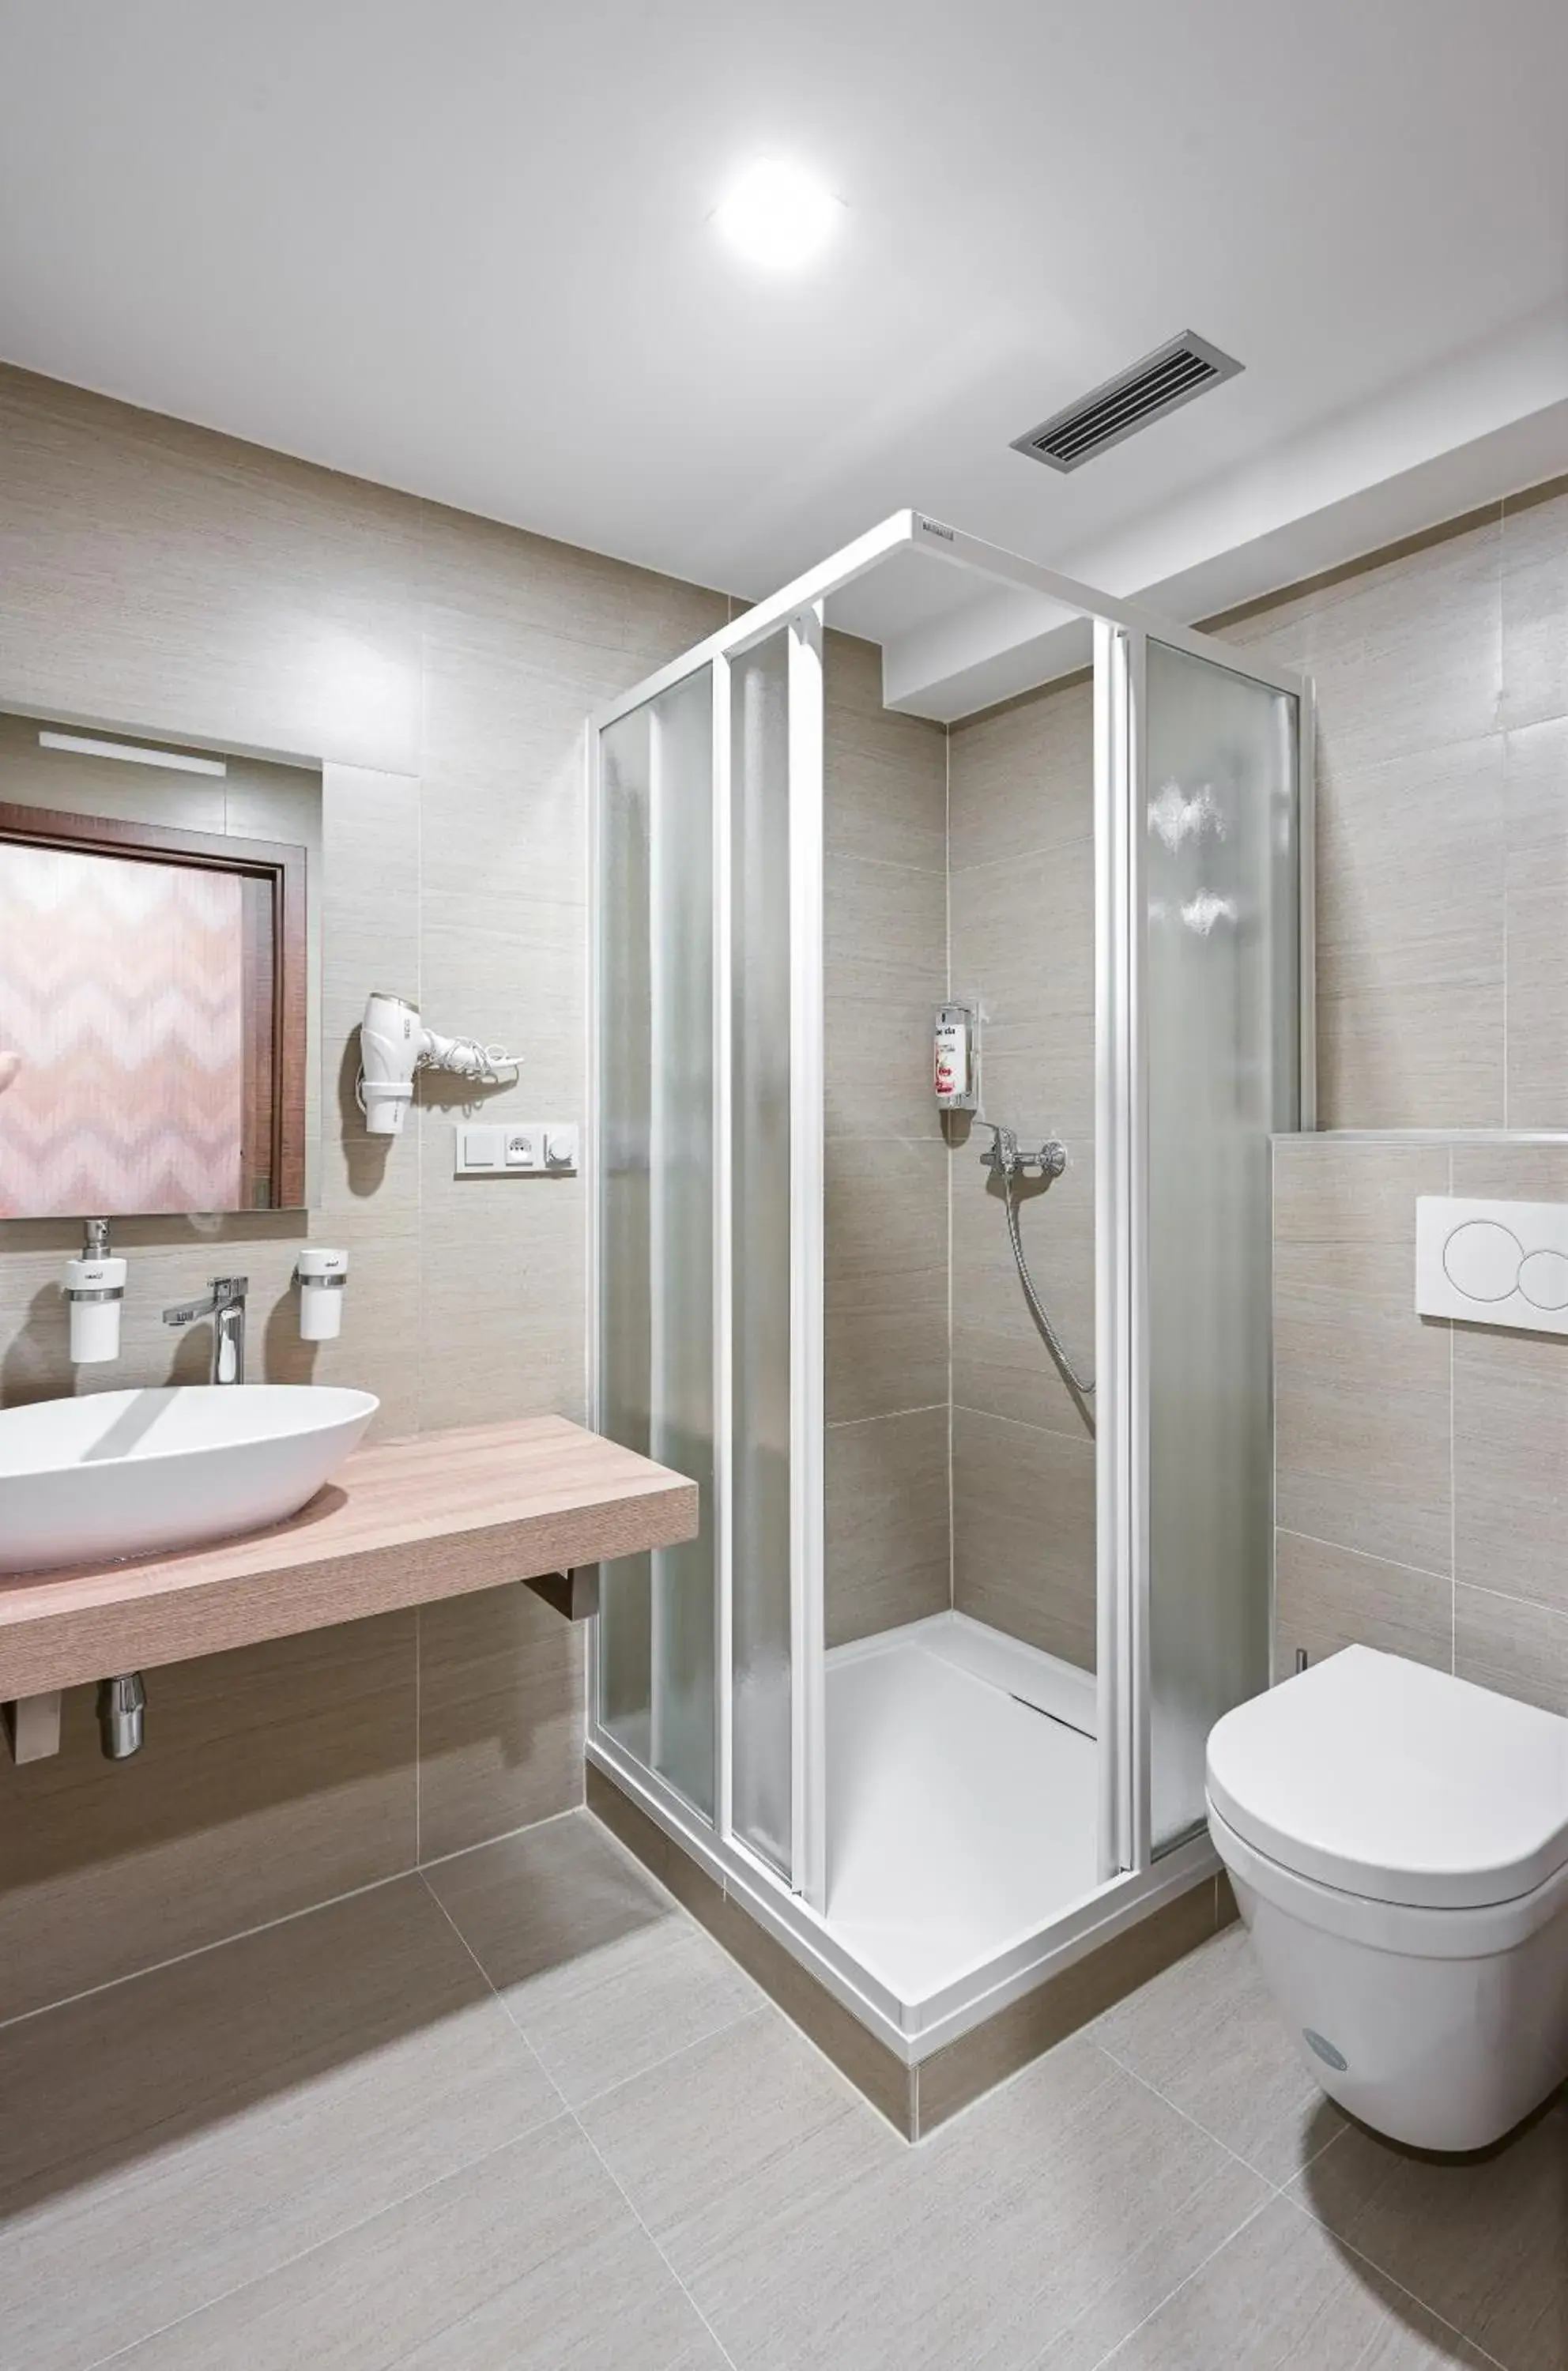 Bathroom in Hotel Prague Star